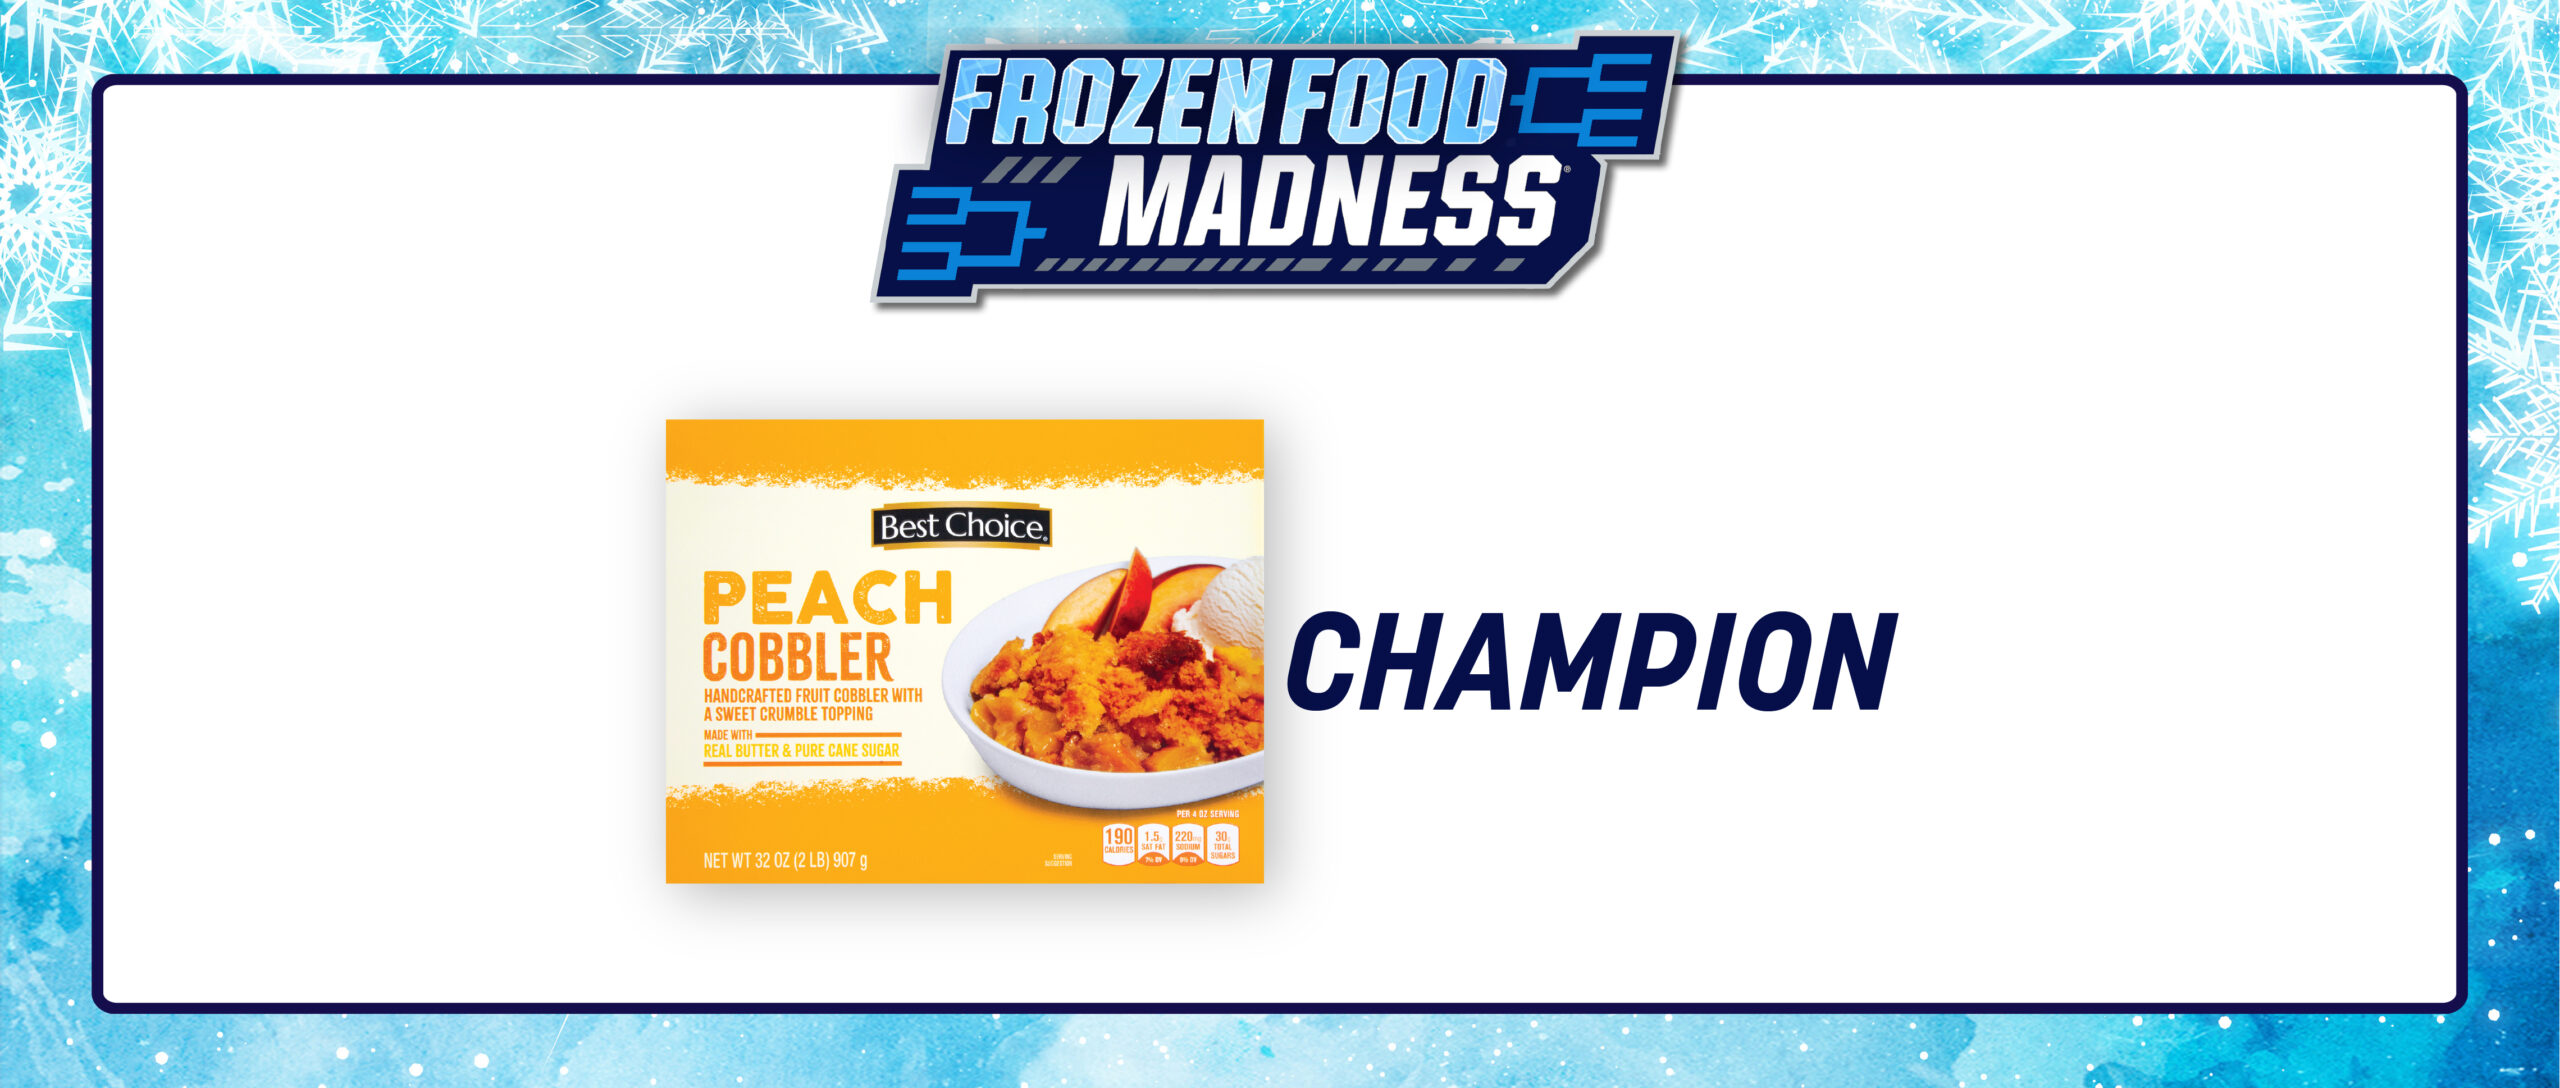 Peach Cobbler Champion of Frozen Food Madness